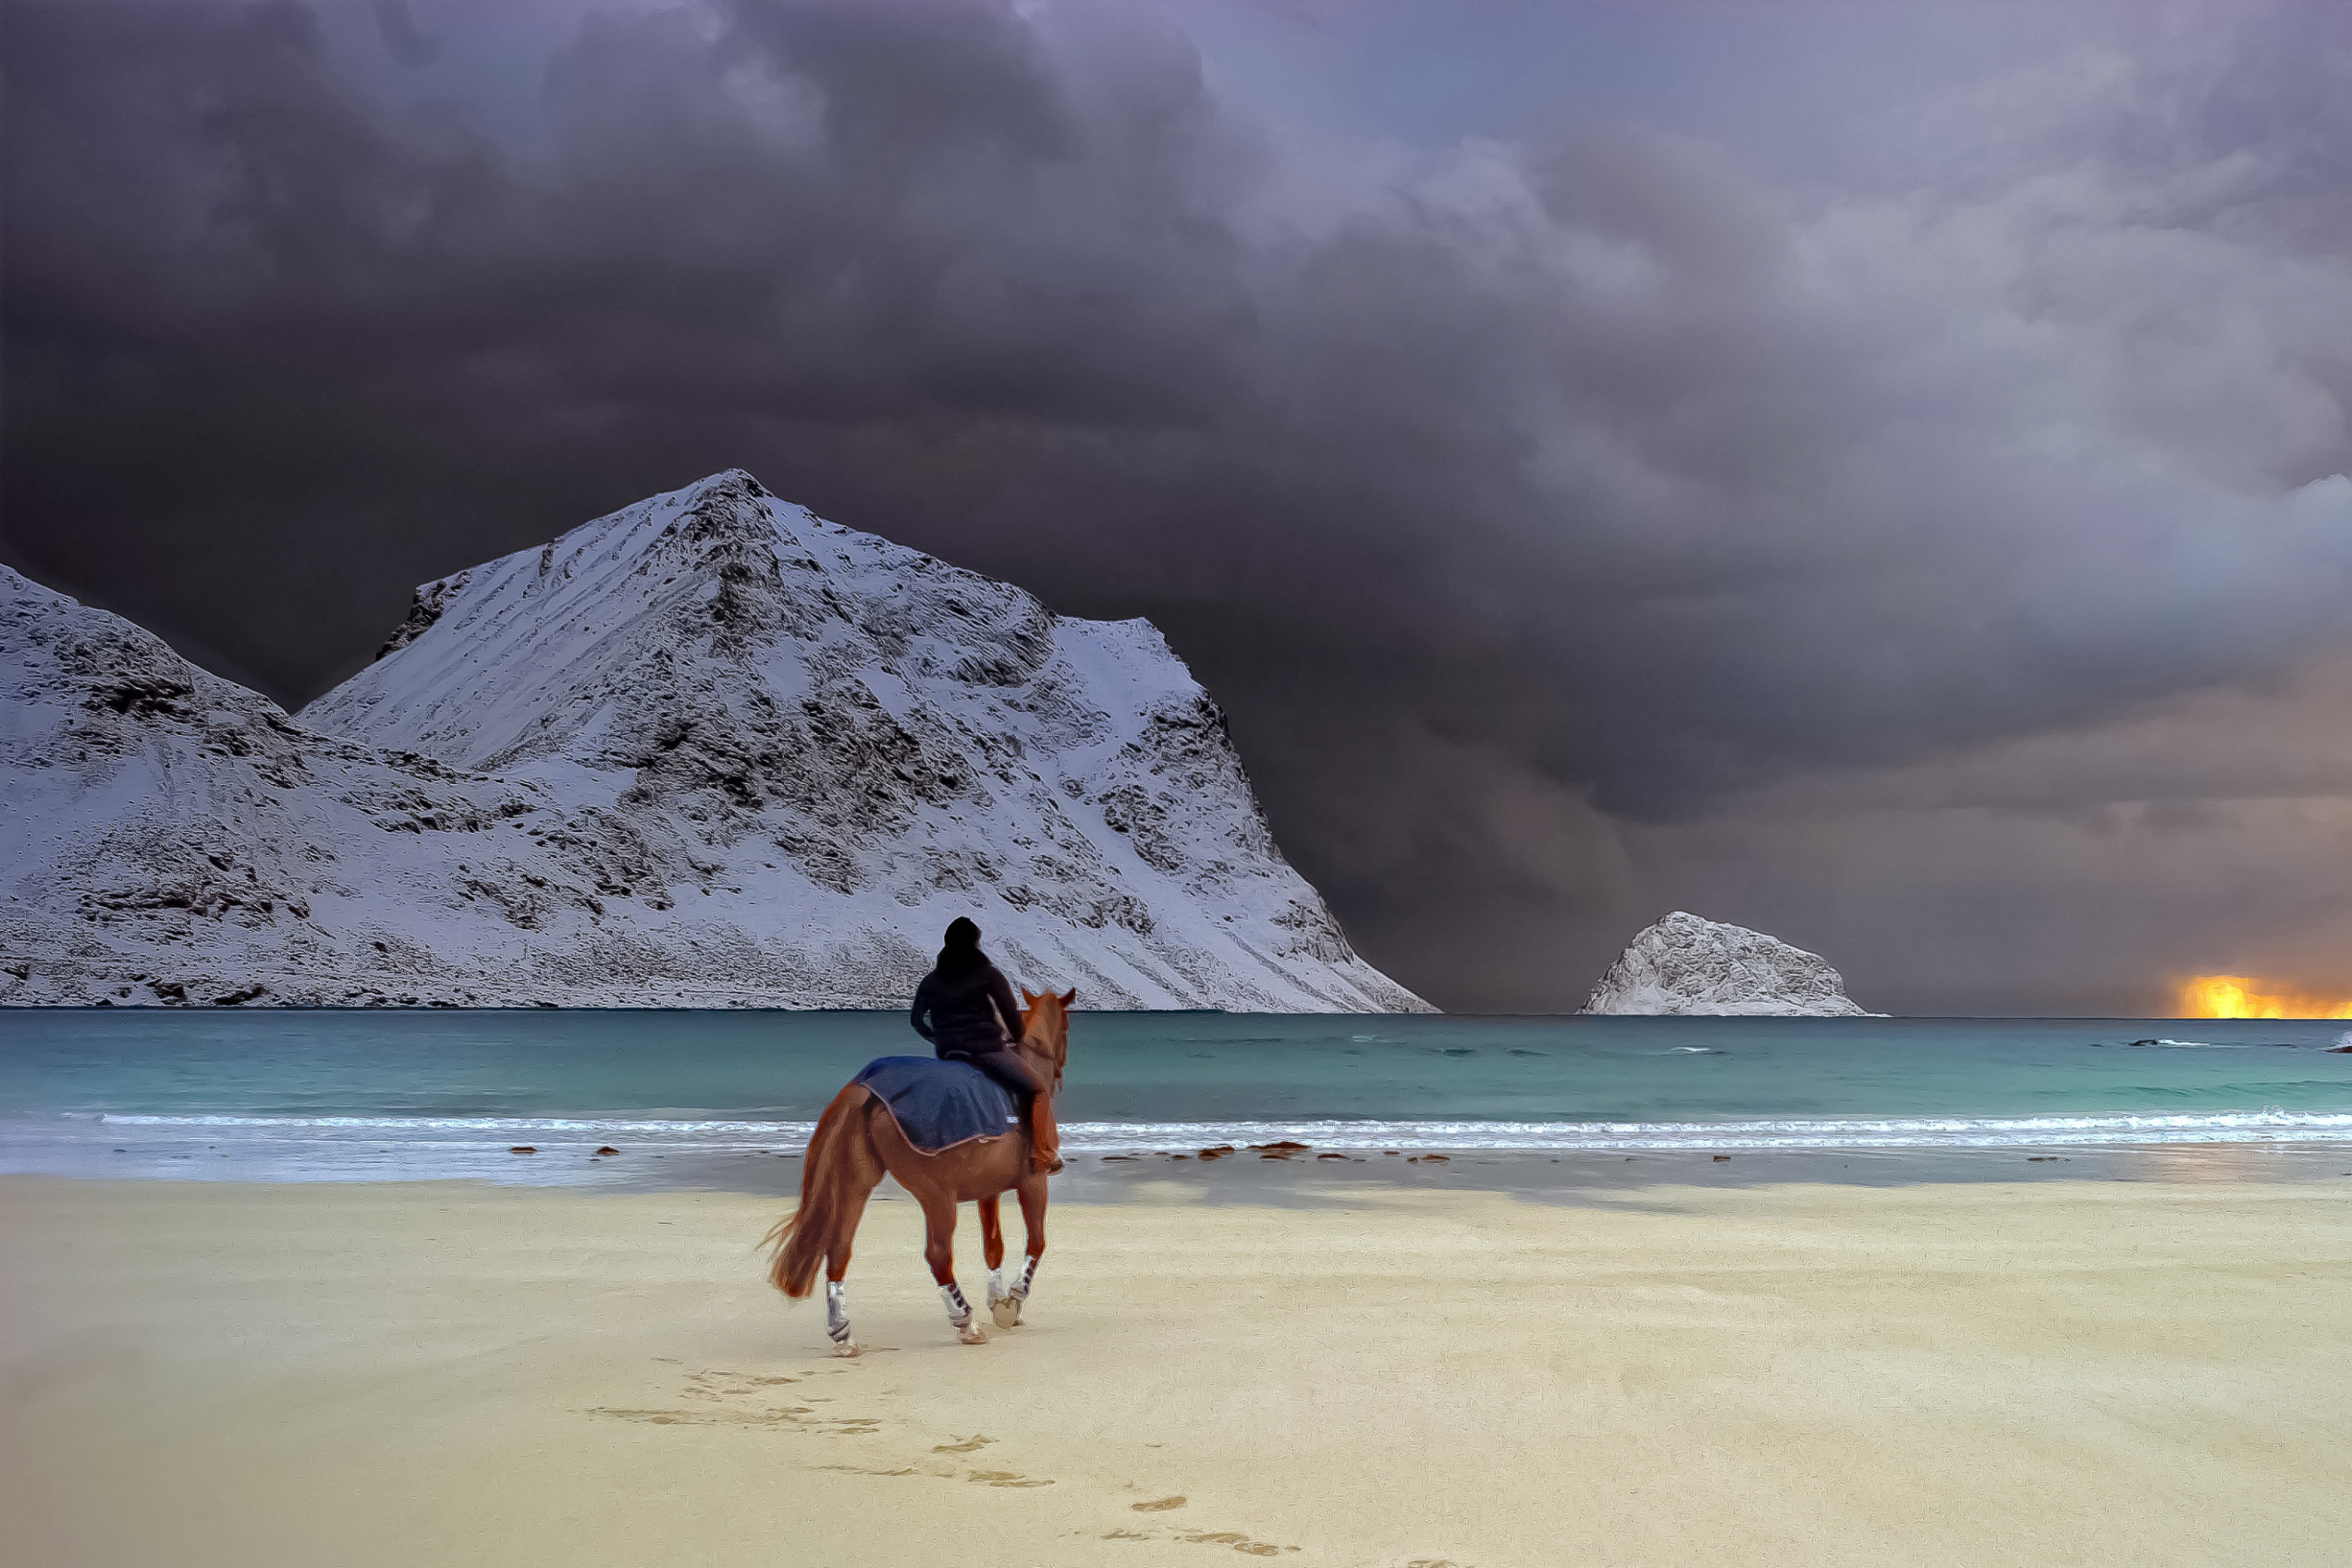 Обои Horse on beach 2880x1920